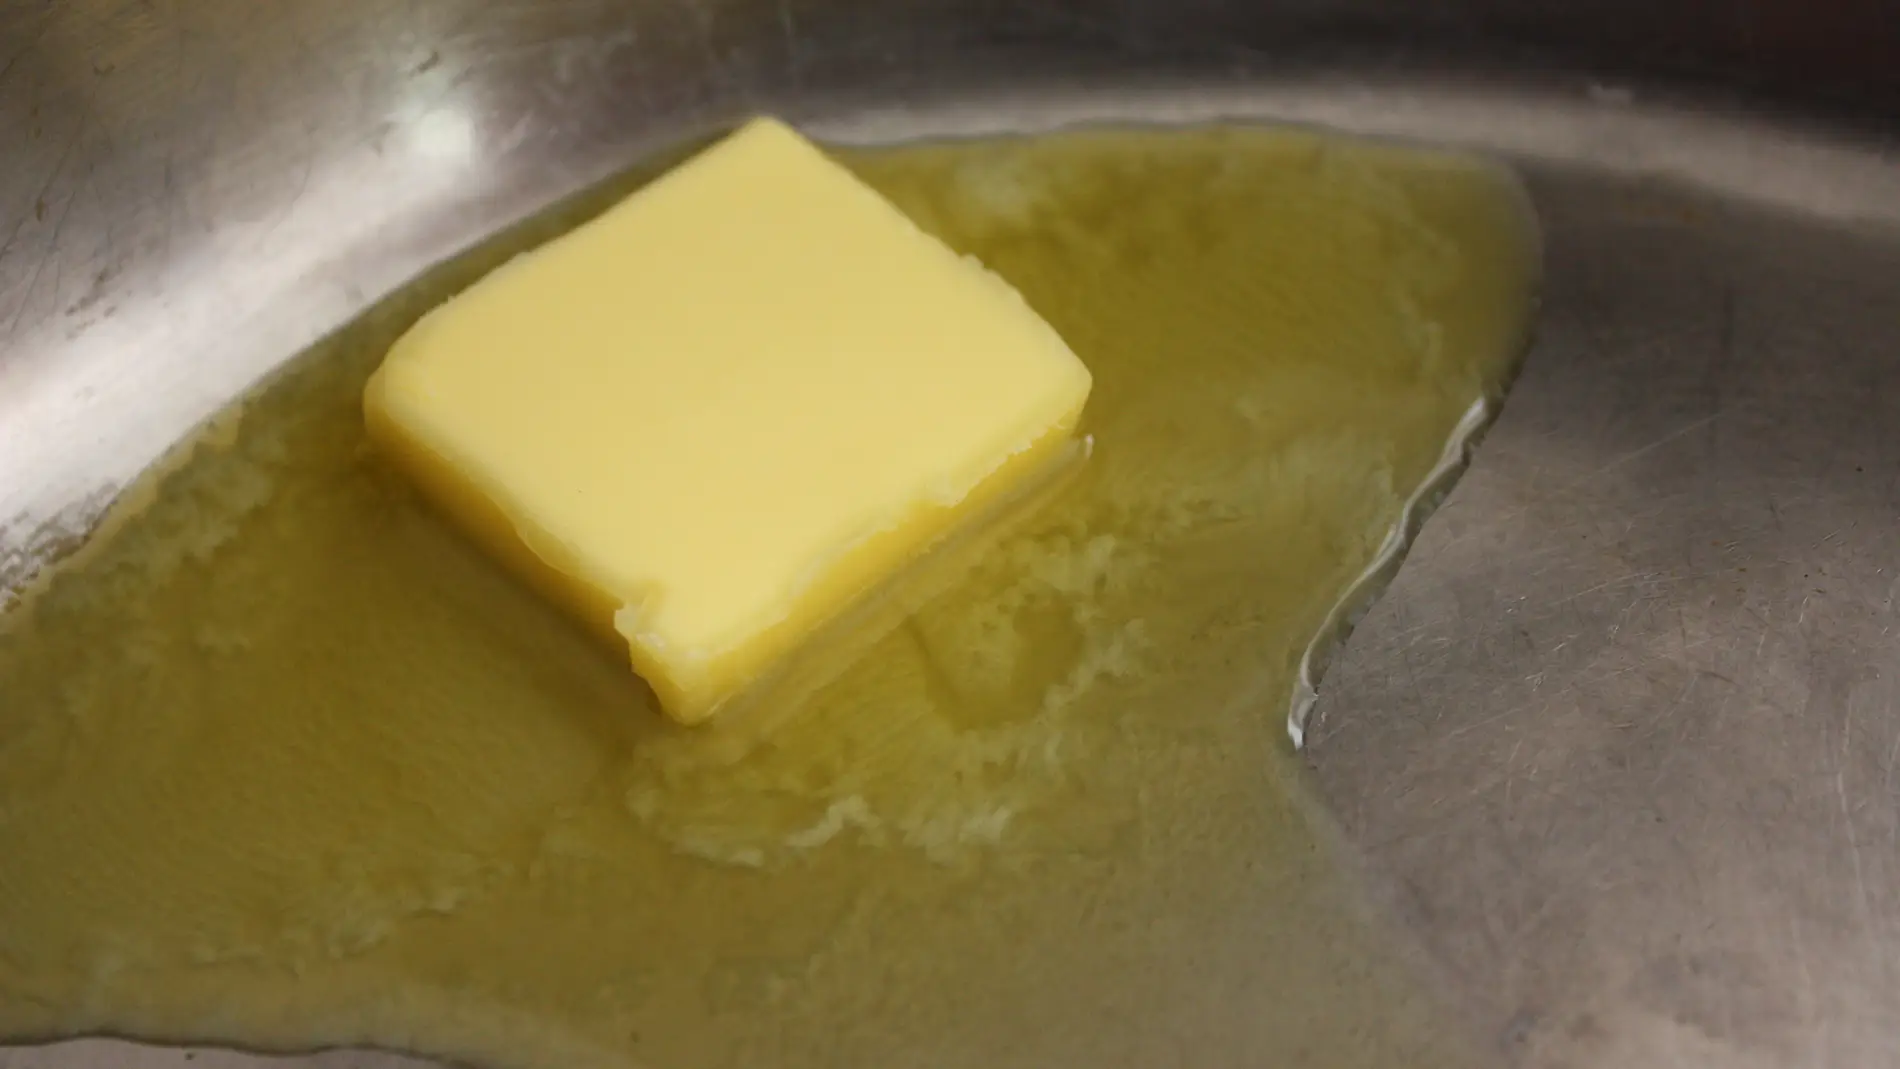 ¿Mantequilla o margarina? Casi mejor la primera...